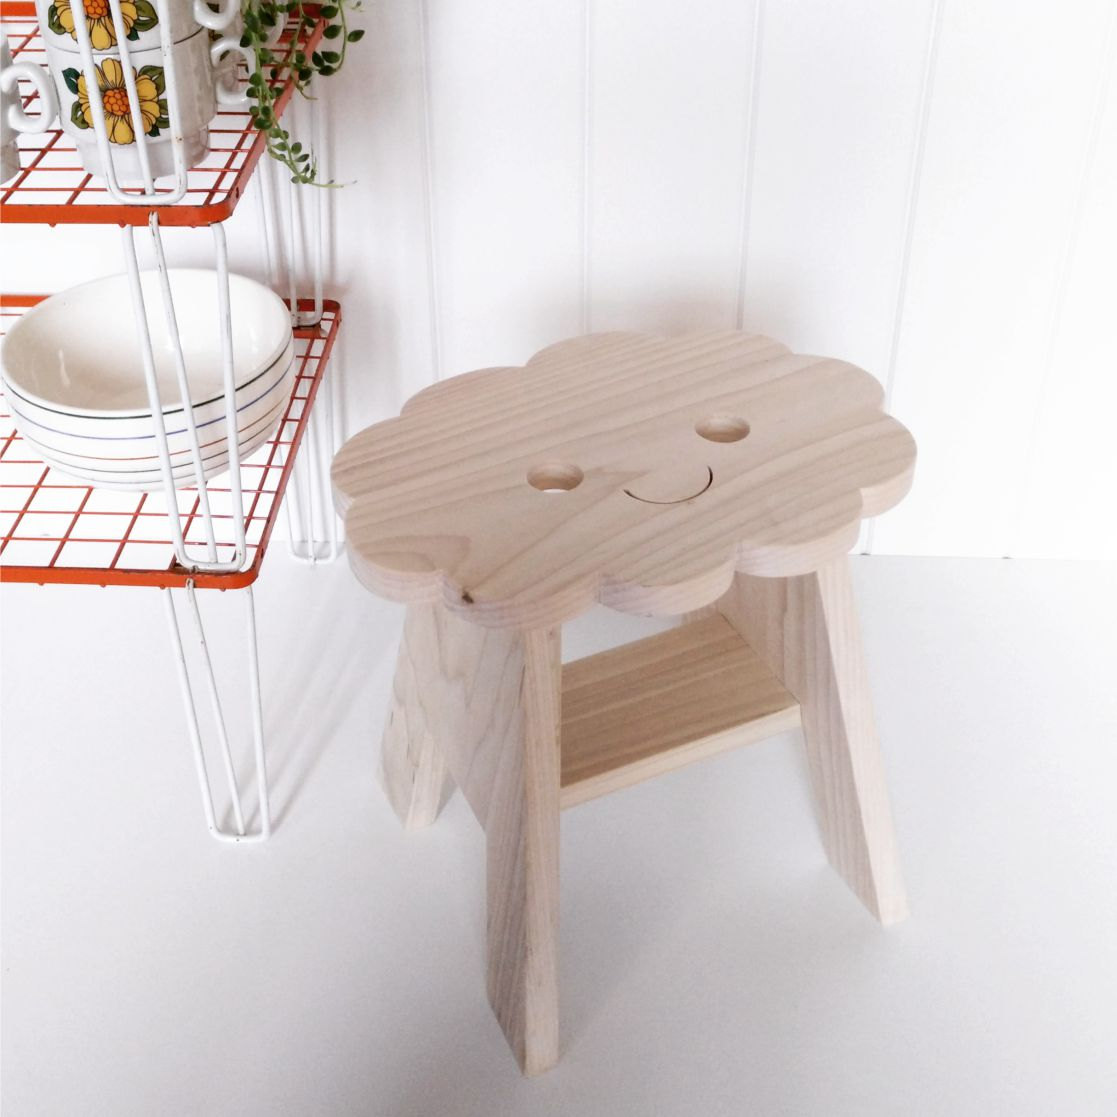 5 stool chair – Hunting Handmade